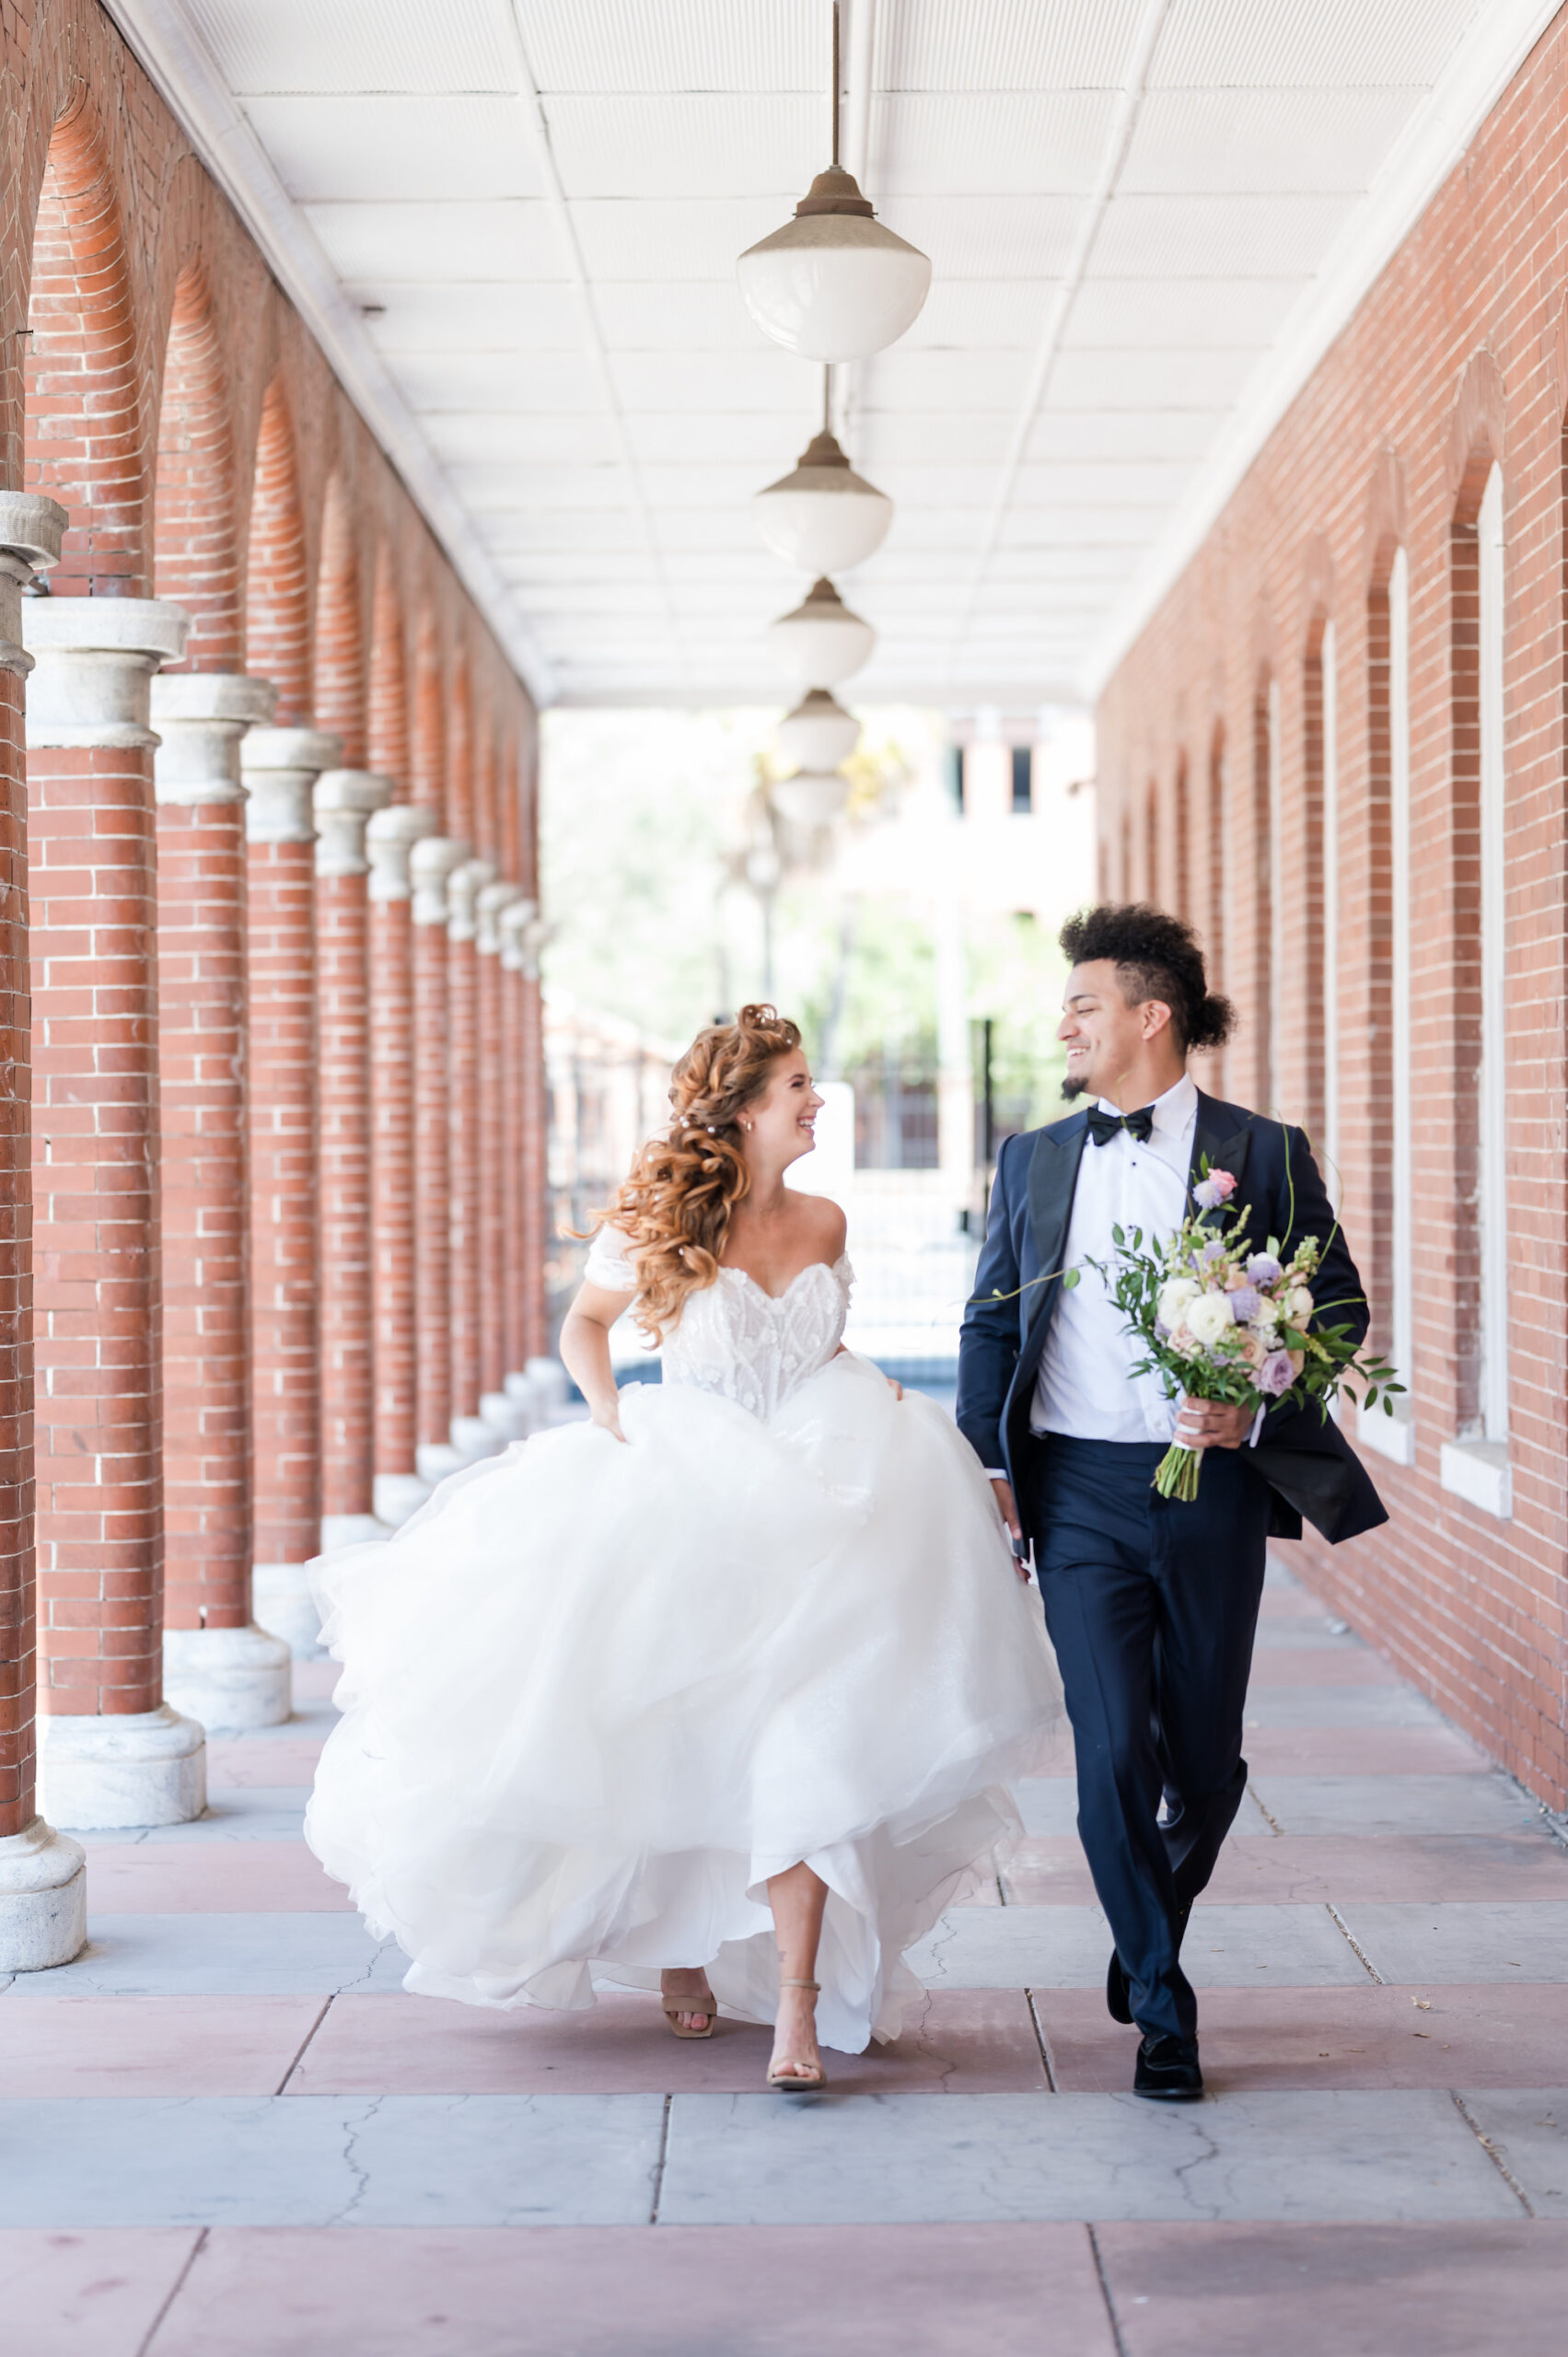 Outdoor Bride and Groom Wedding Portrait | Ybor City Photographer Amanda Zabrocki Photography | Planner EventFull Weddings